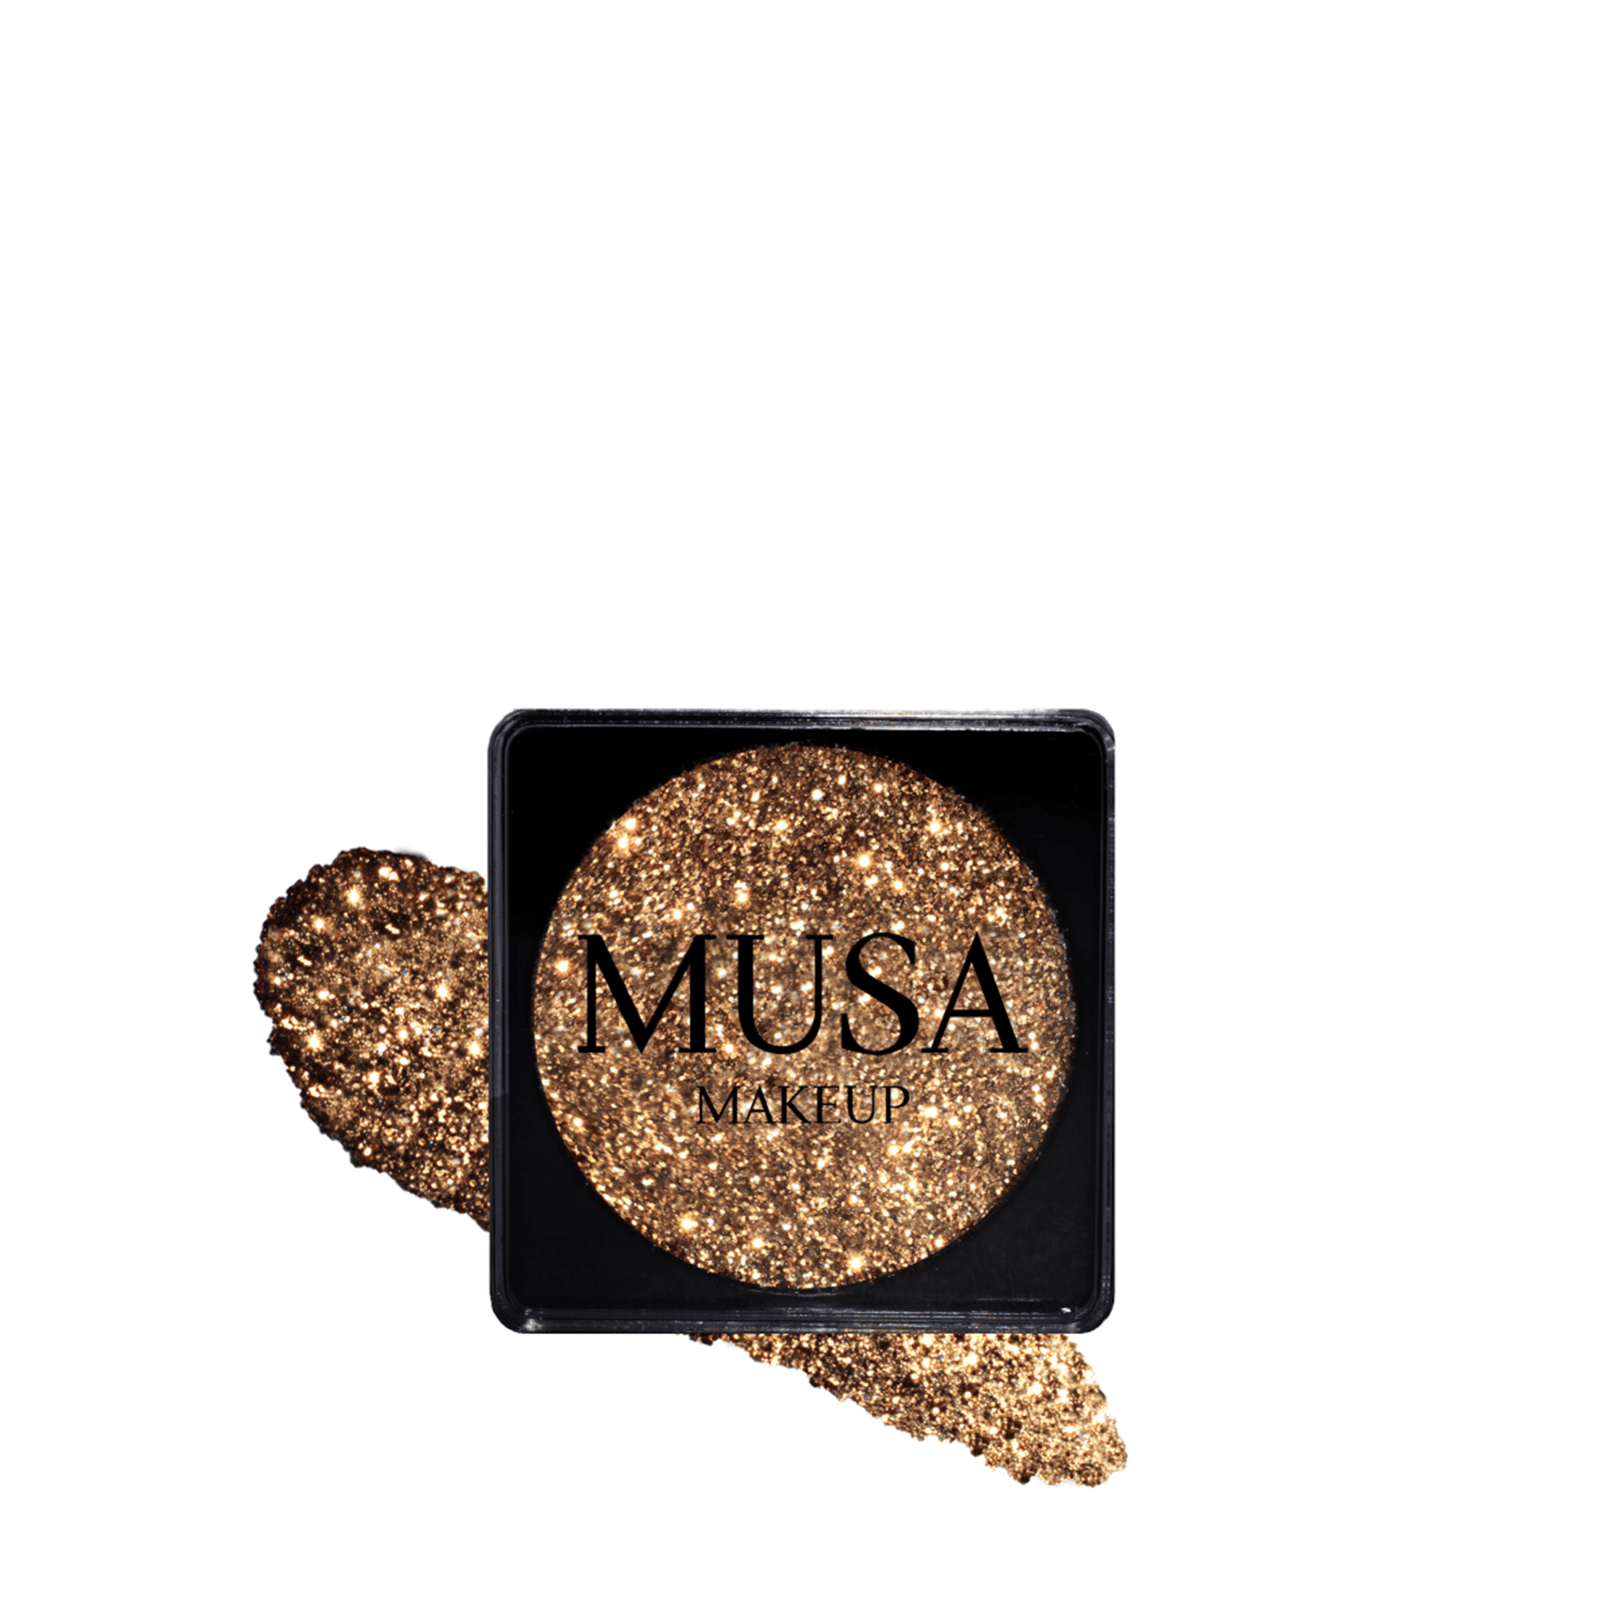 MUSA Makeup Creamy Glitter Nubia 4g